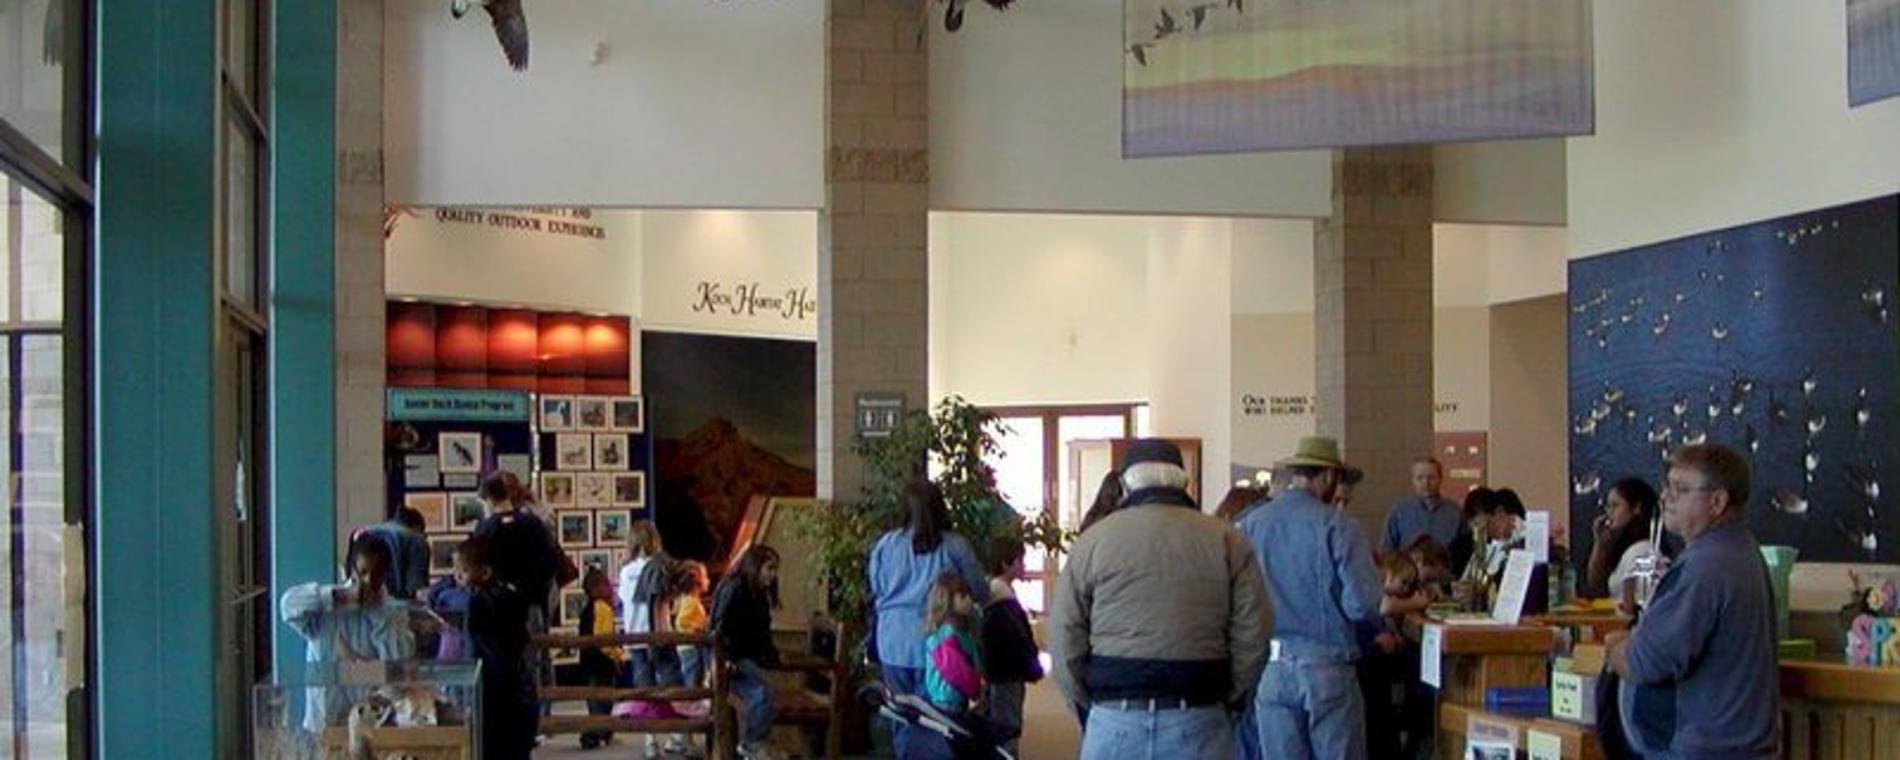 Great Plains Nature Center Interior